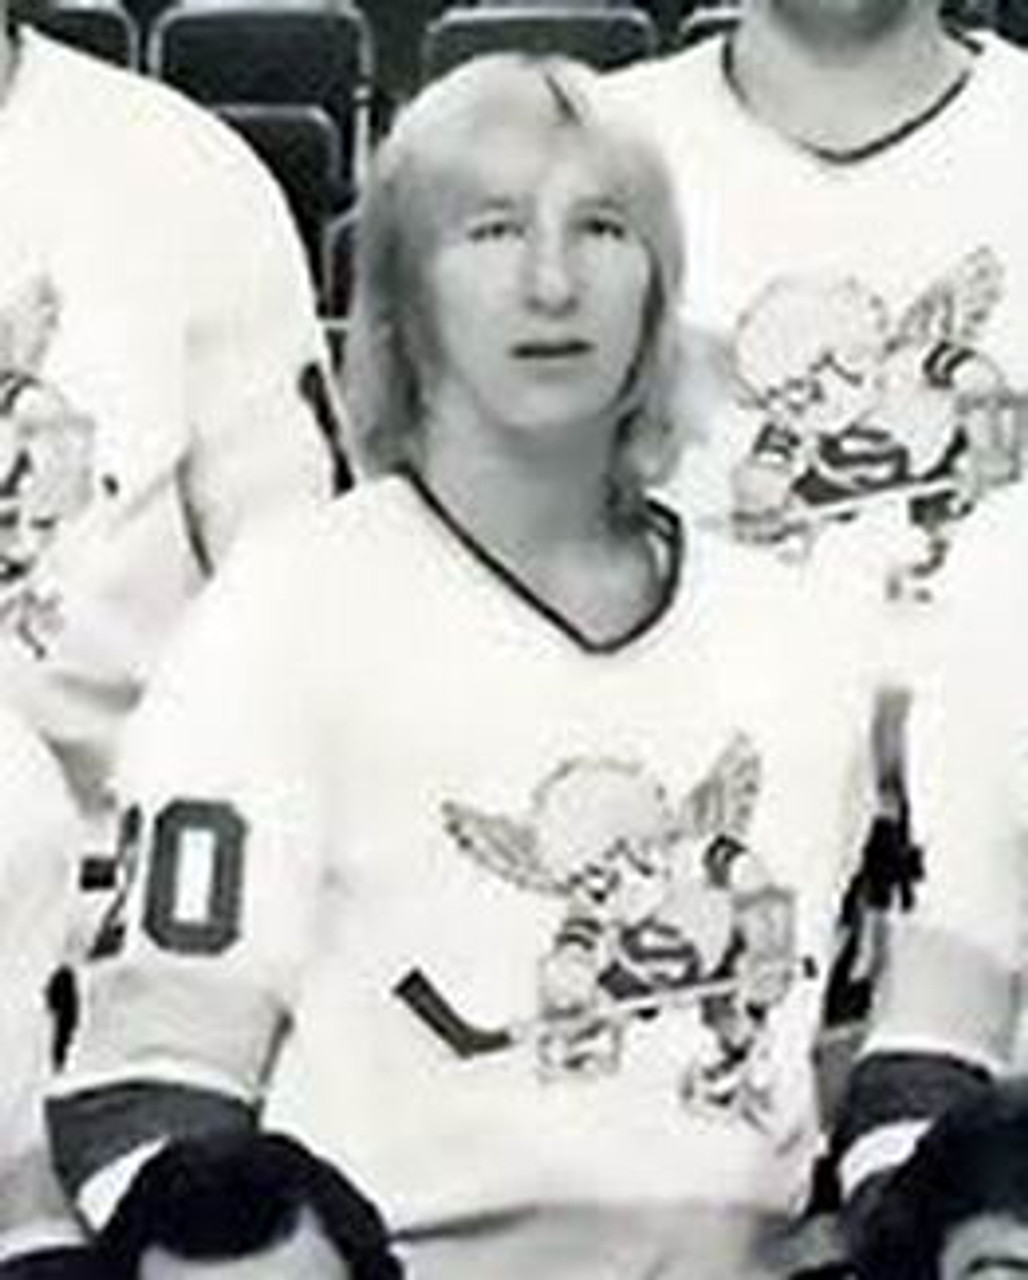 WHA 1975-76 Minnesota Fighting Saints Jack Carlson 20 Home Hockey Jersey —  BORIZ